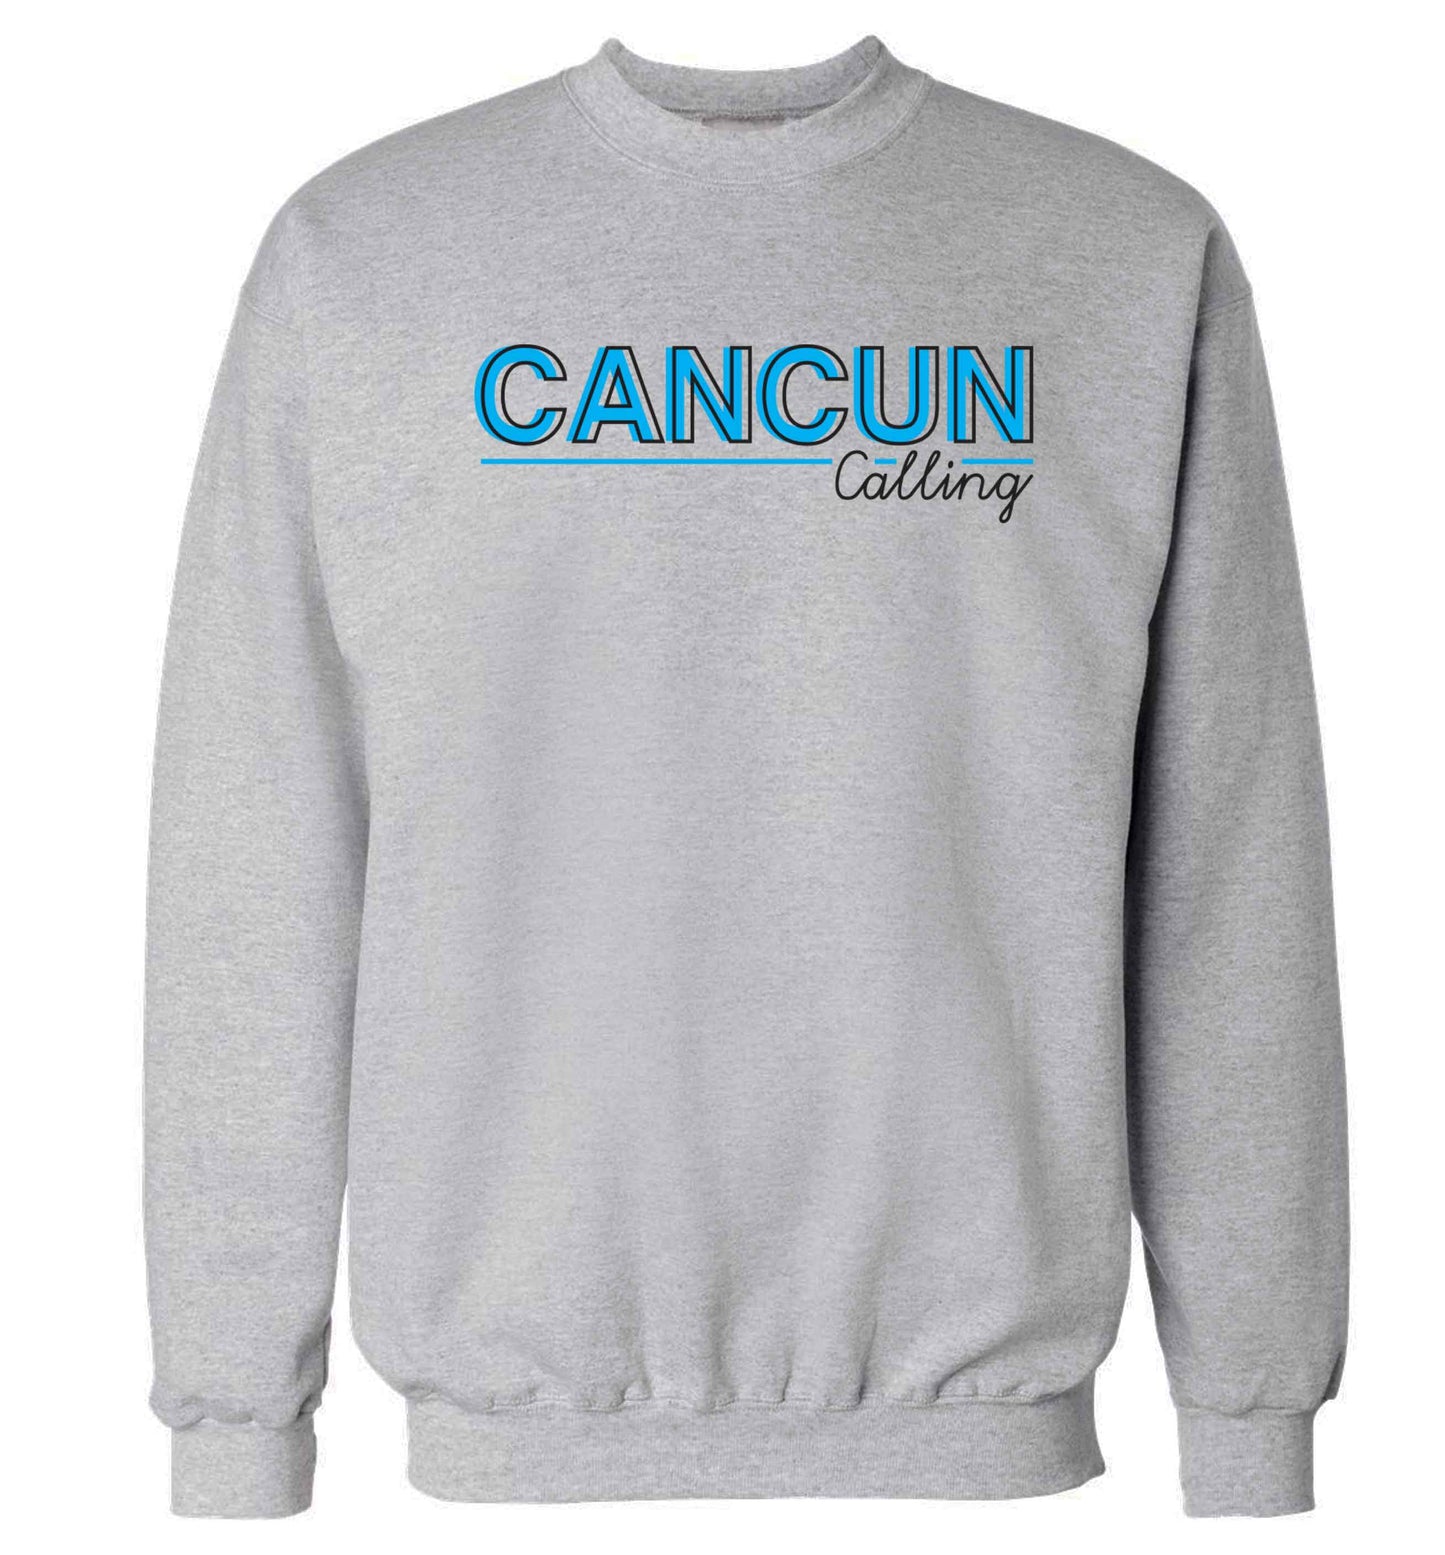 Cancun calling Adult's unisex grey Sweater 2XL